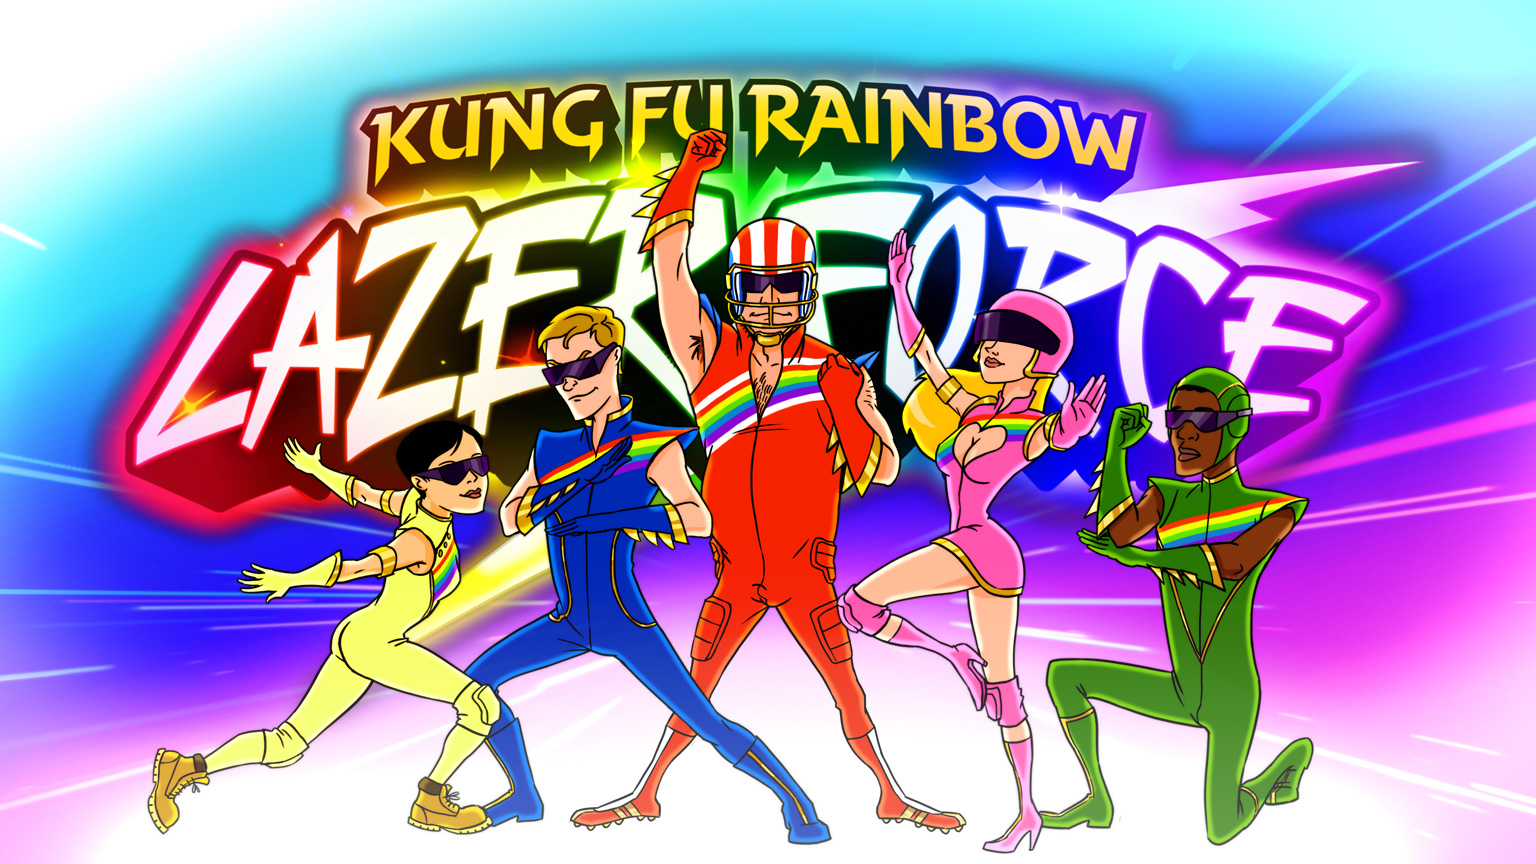 Gta 5 kung fu rainbow lazer force (120) фото